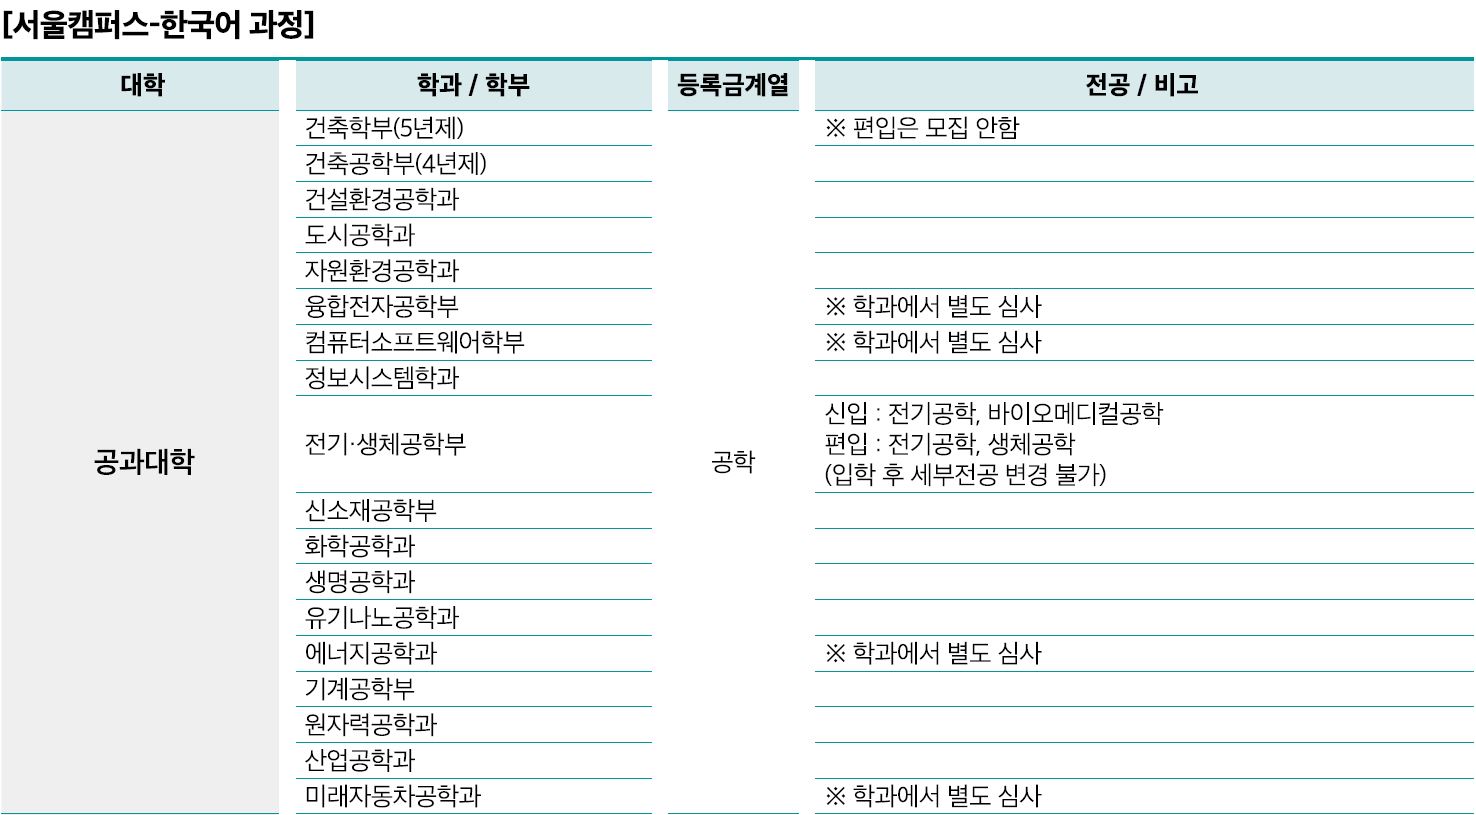 Hanyang University Foreign Student Admission Unit Eligibility Schedule_English Version 한양대 외국인전형 모집단위 지원자격 전형일정_한글본_01_모집단위.JPG